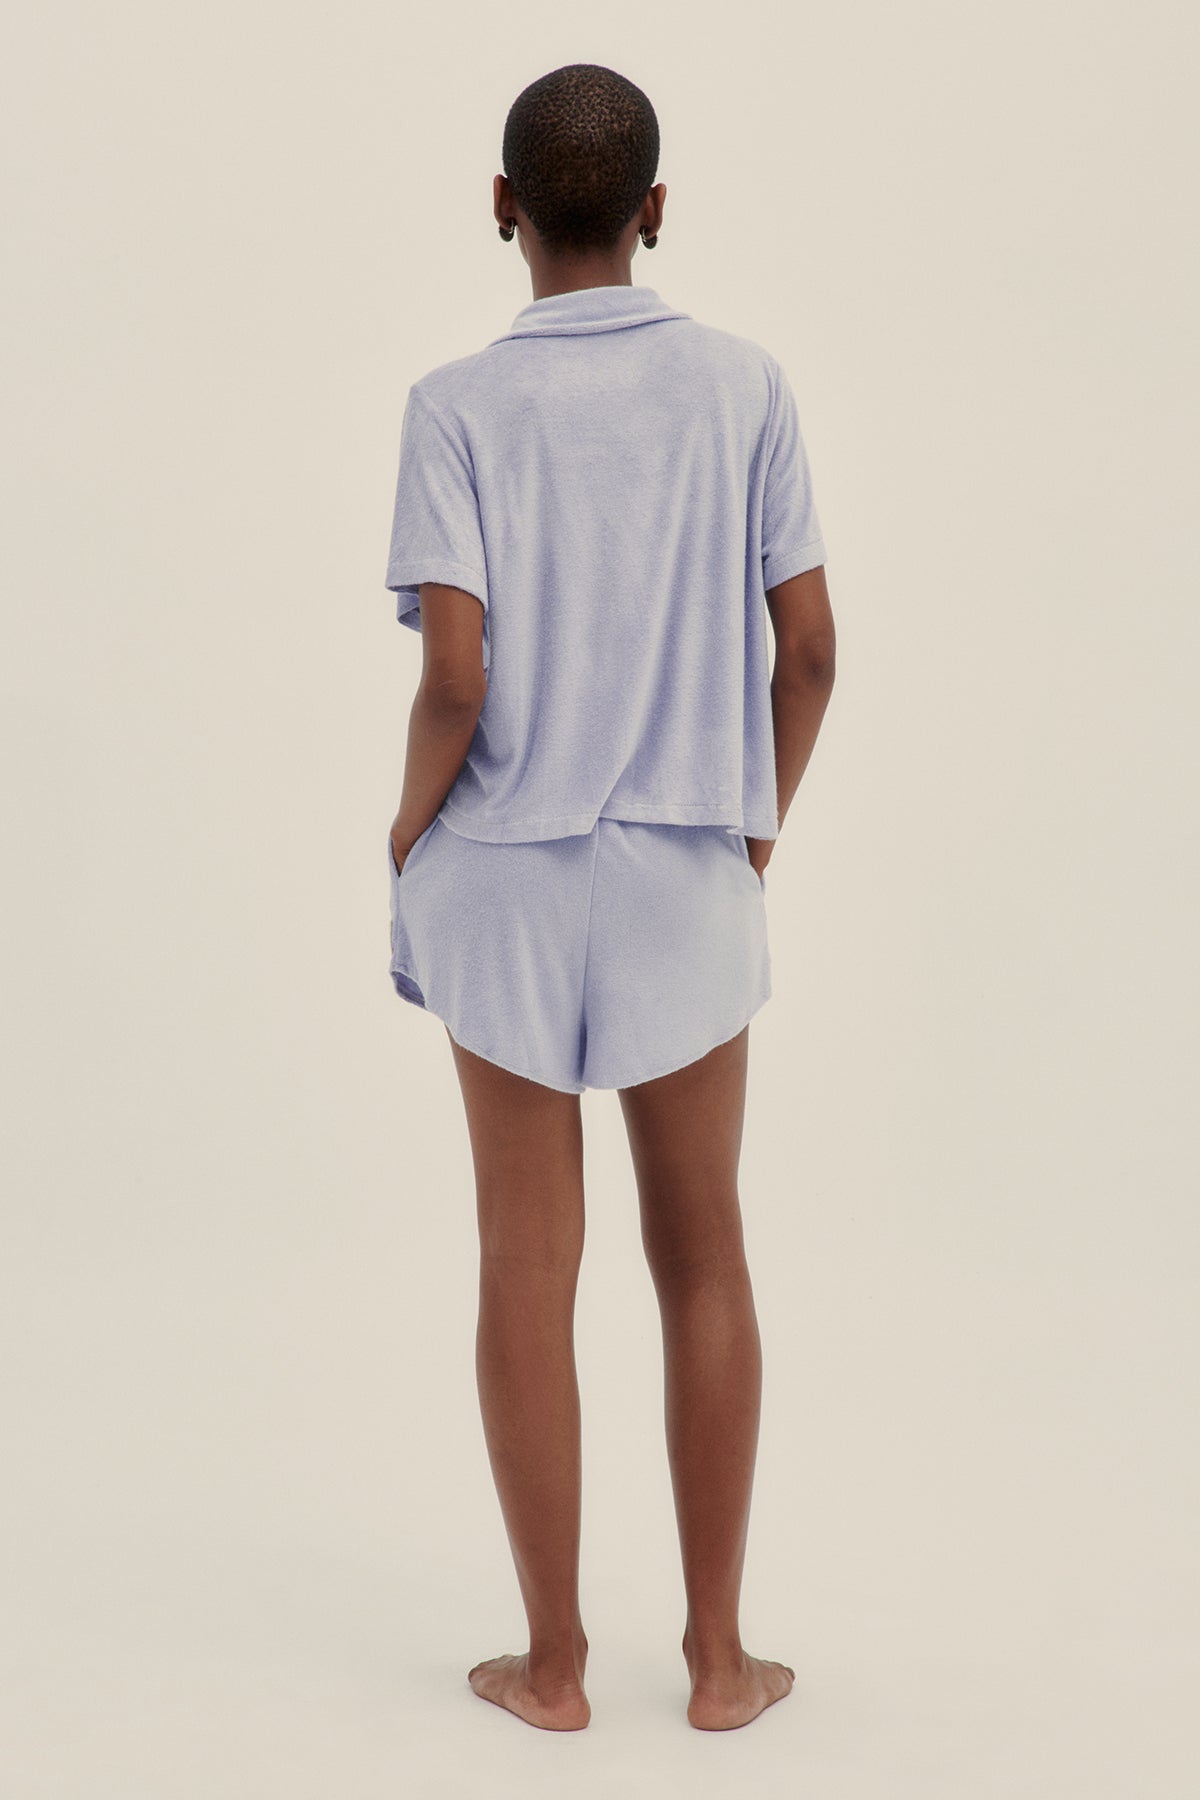 Lavender Terry Short Sleeve Shirt - Polonio